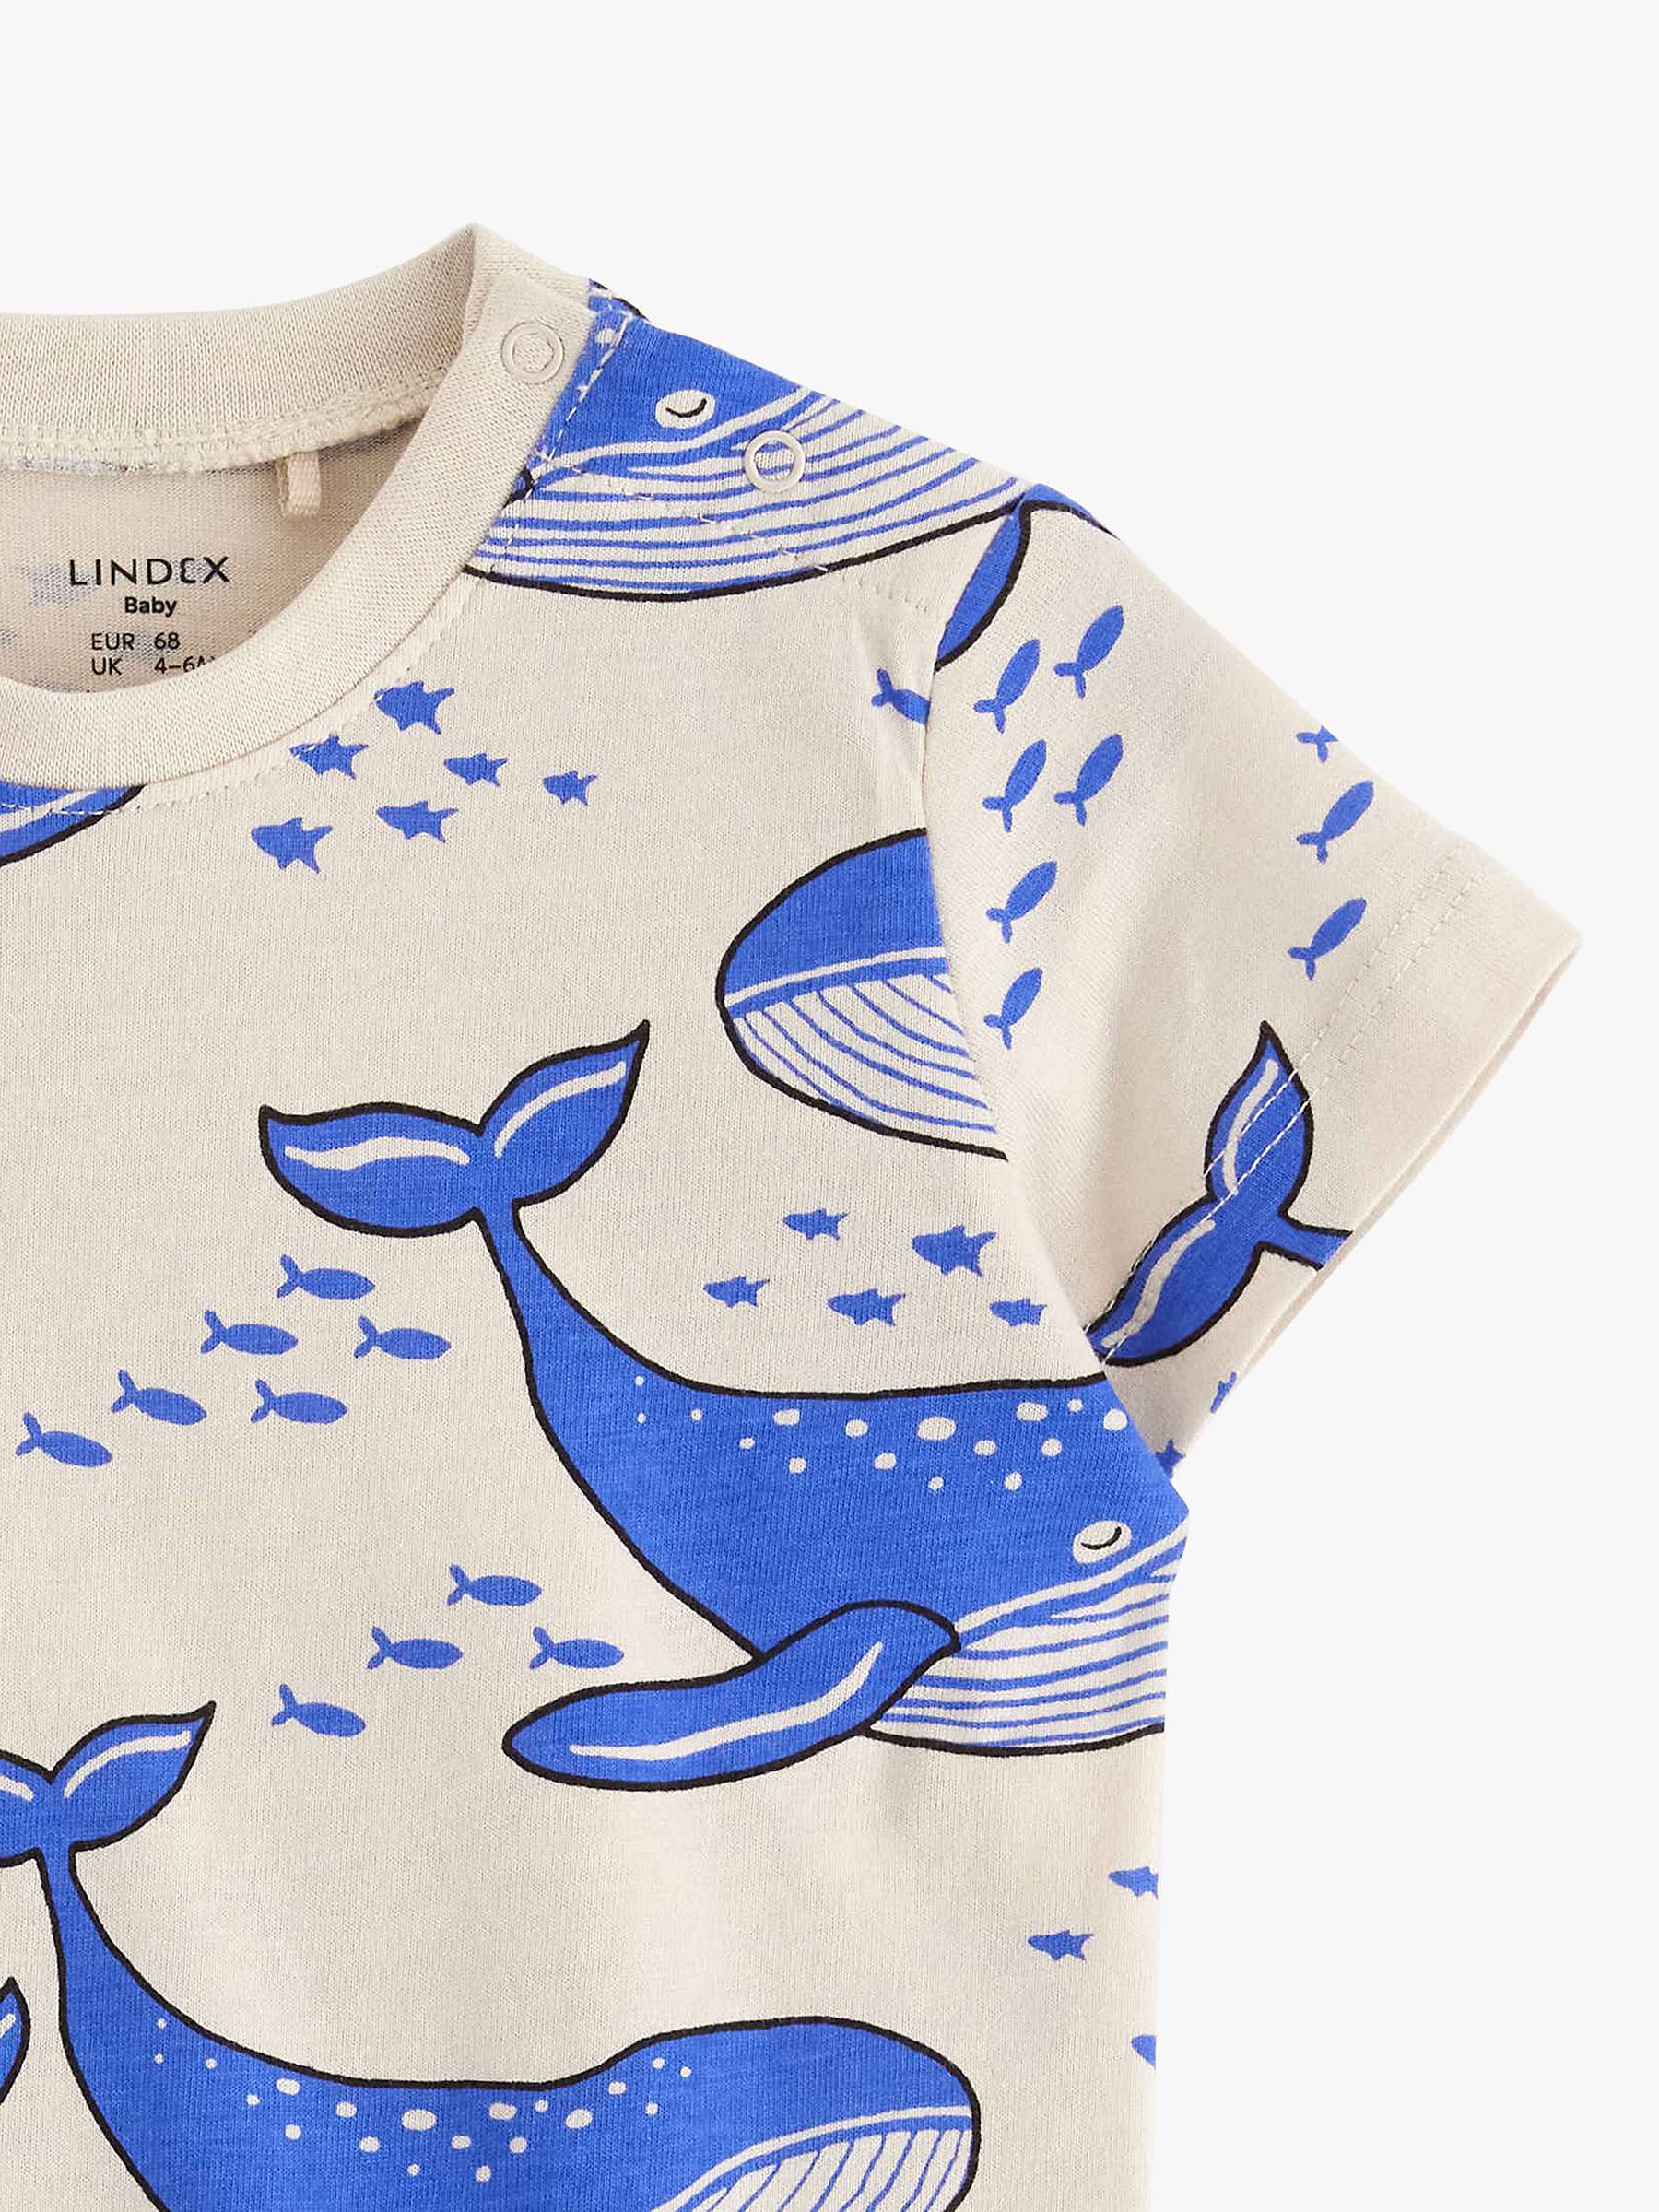 Buy Lindex Baby Organic Cotton Whale Print Short Sleeve Top, Light Beige/Blue Online at johnlewis.com